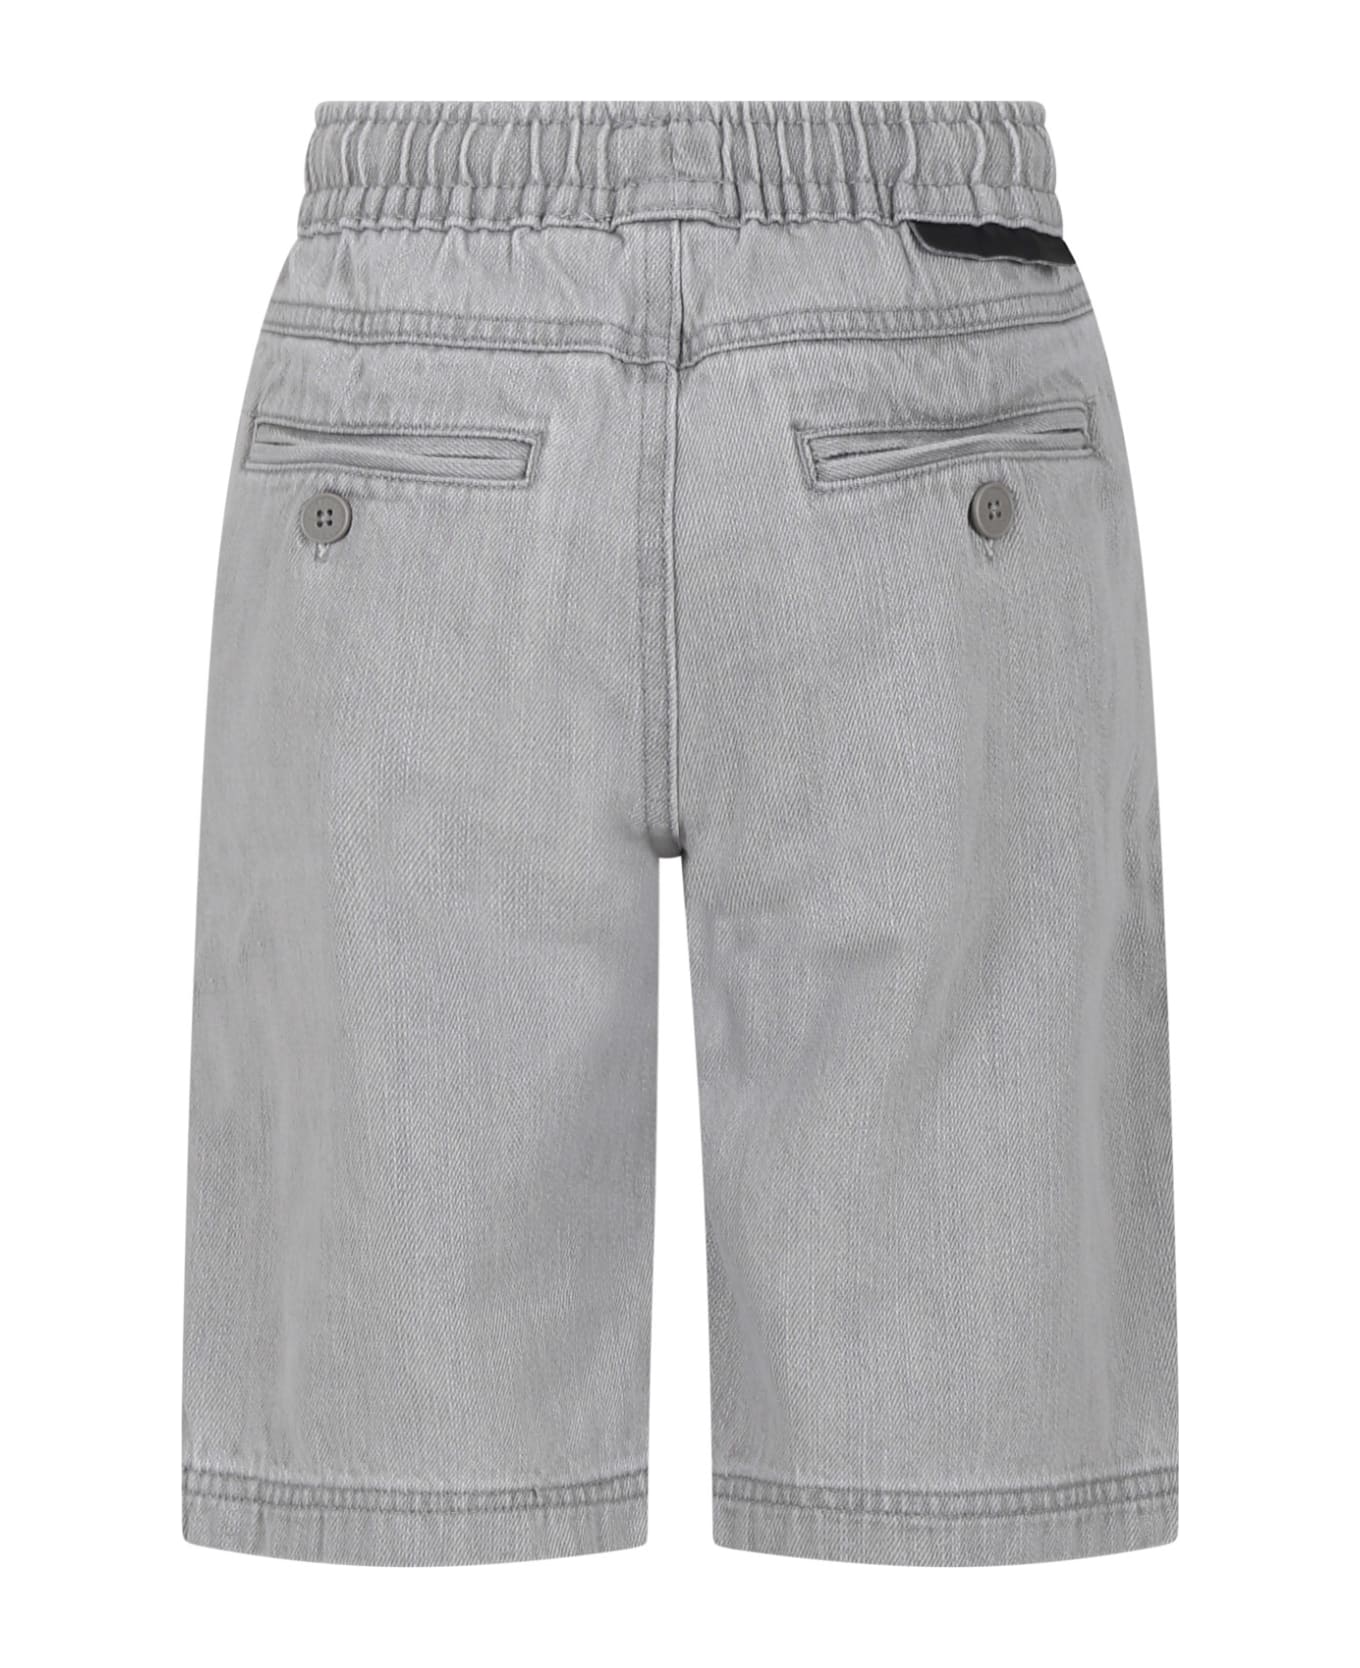 Stella McCartney Kids Gray Casual Shorts For Boy - Grey